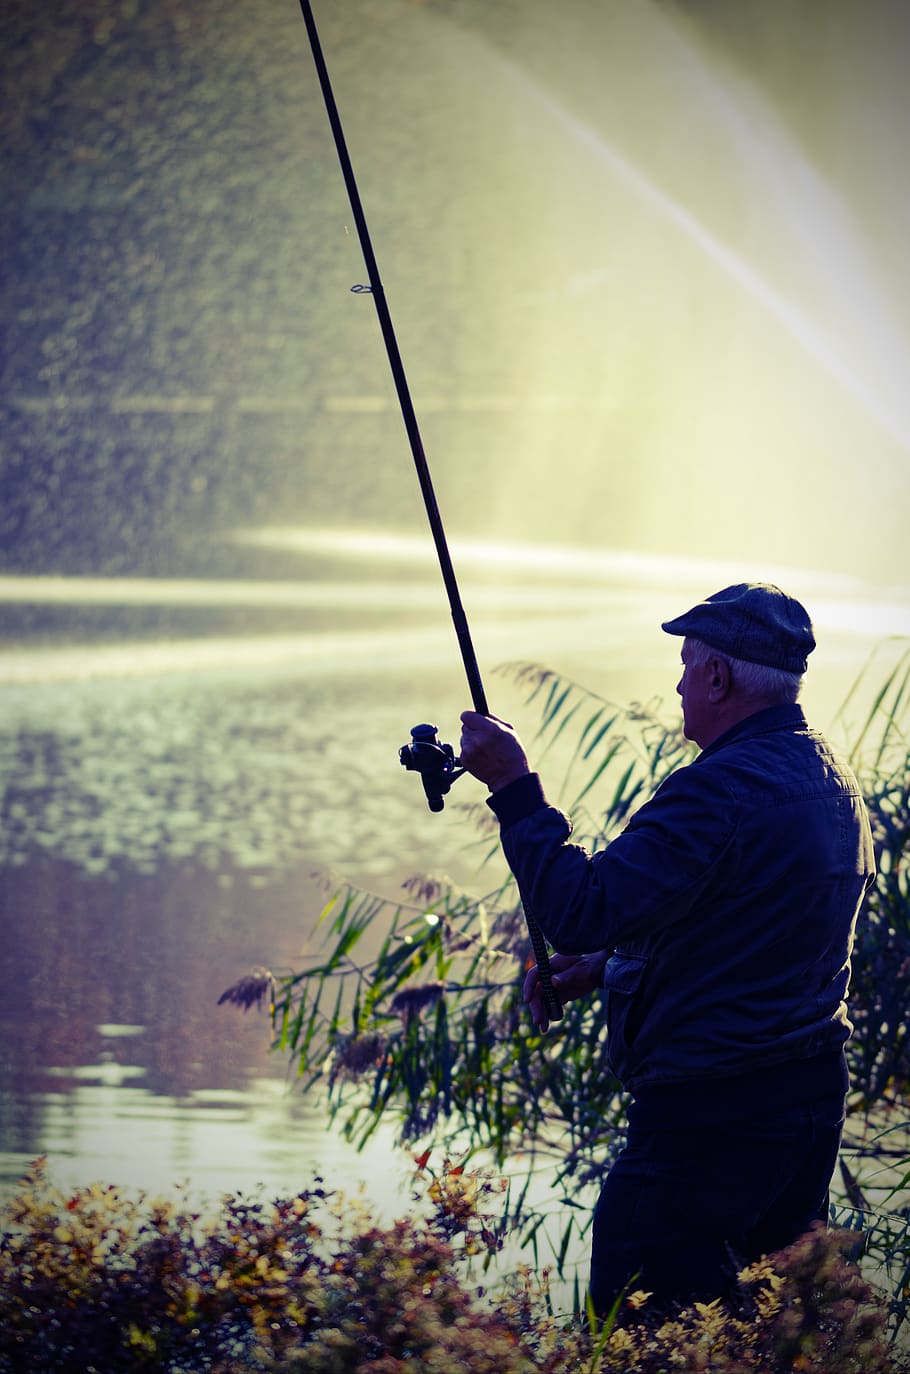 fisherman, rod, fishing, water, fountain, hobby, relaxation, leisure, nature, autumn